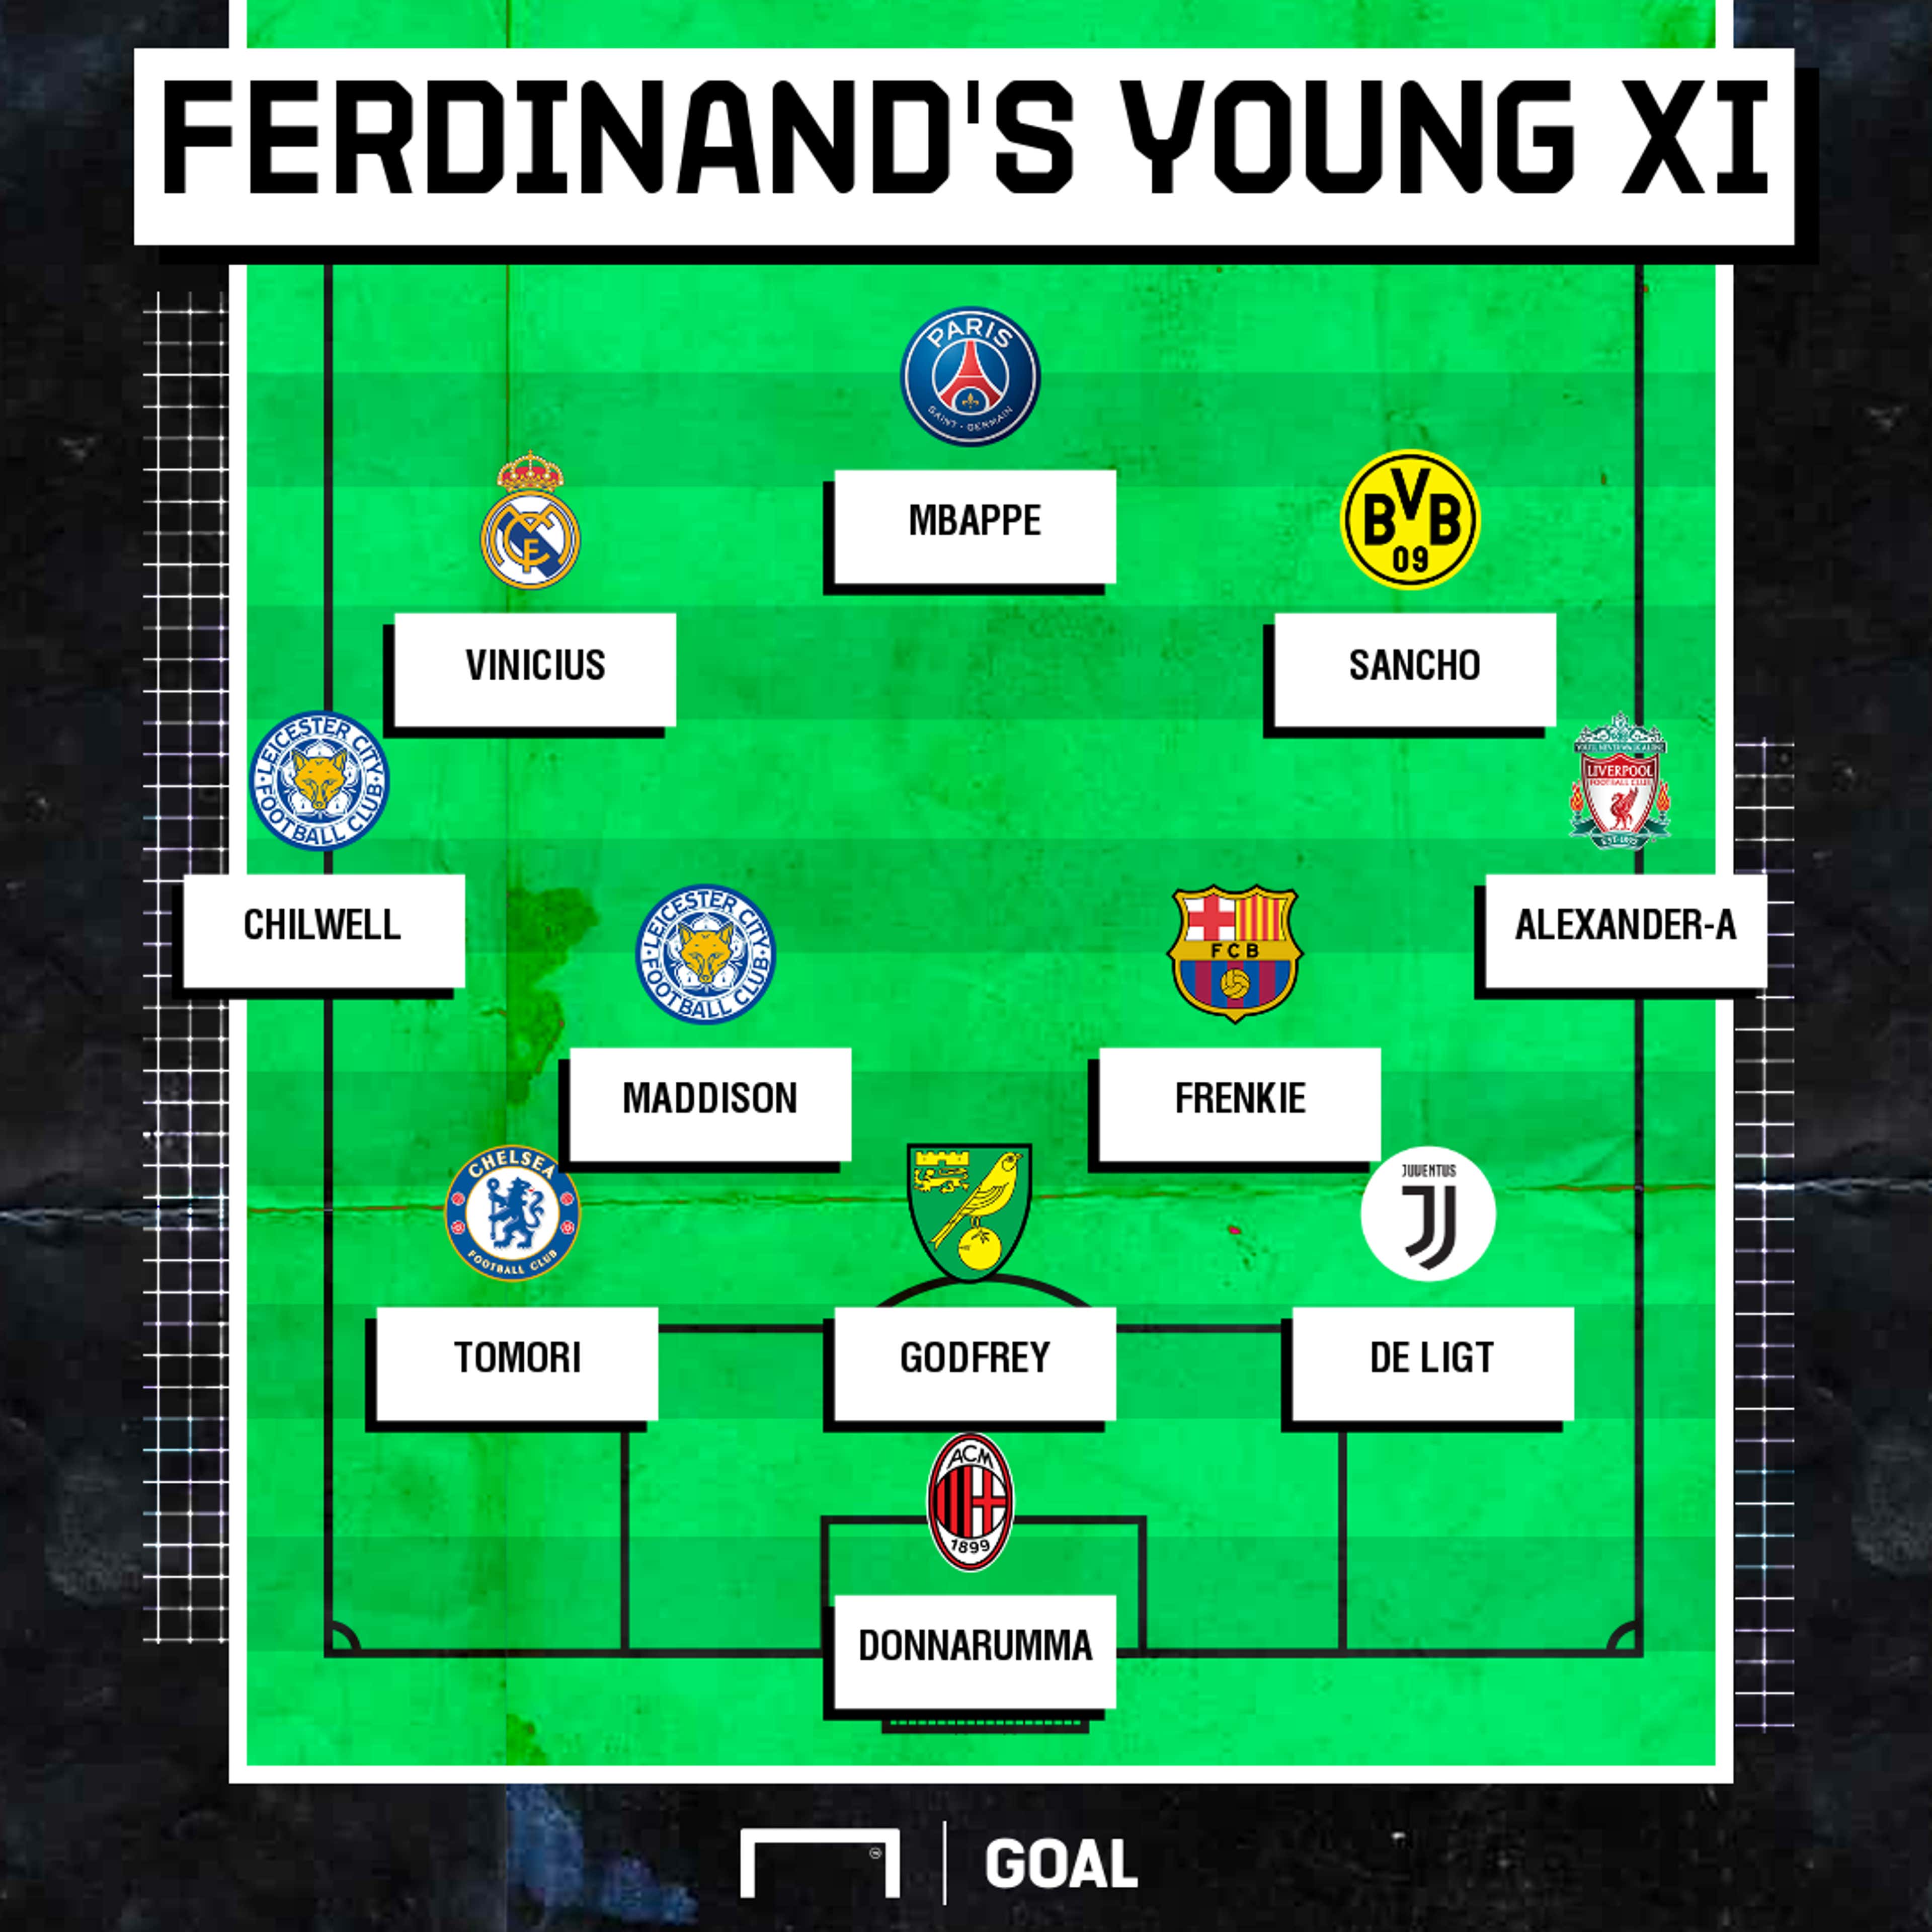 Ferdinand's young XI